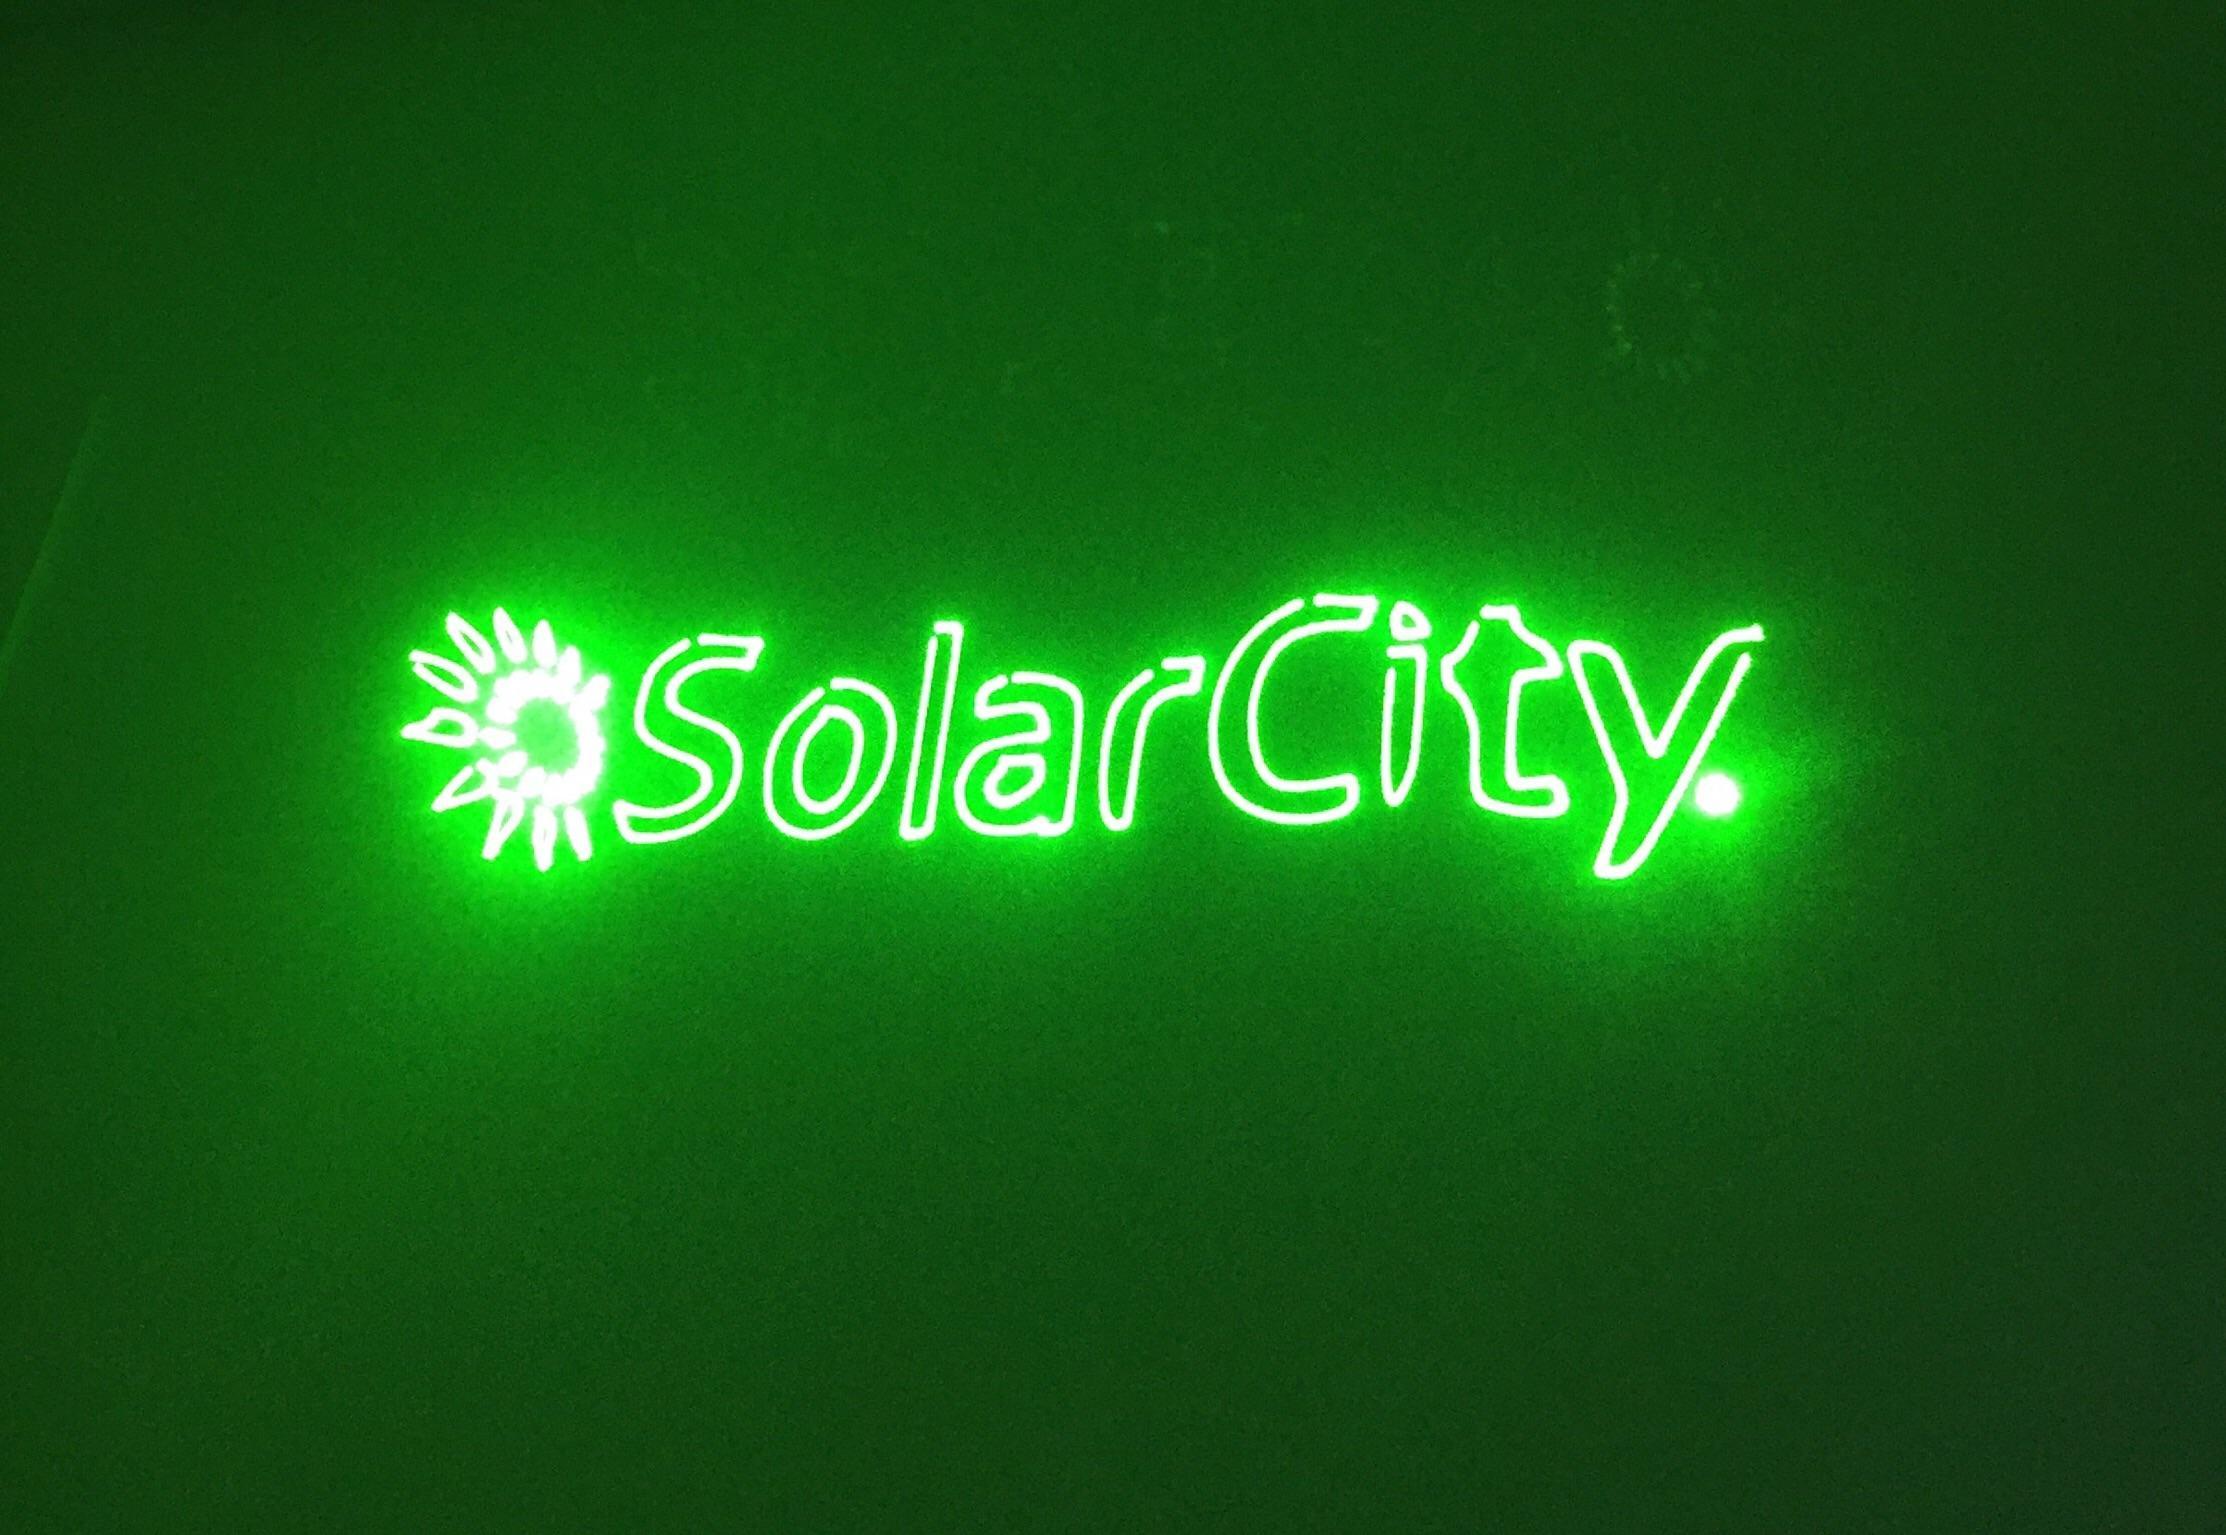 New SolarCity Logo - Laser Projected Solar City Logo